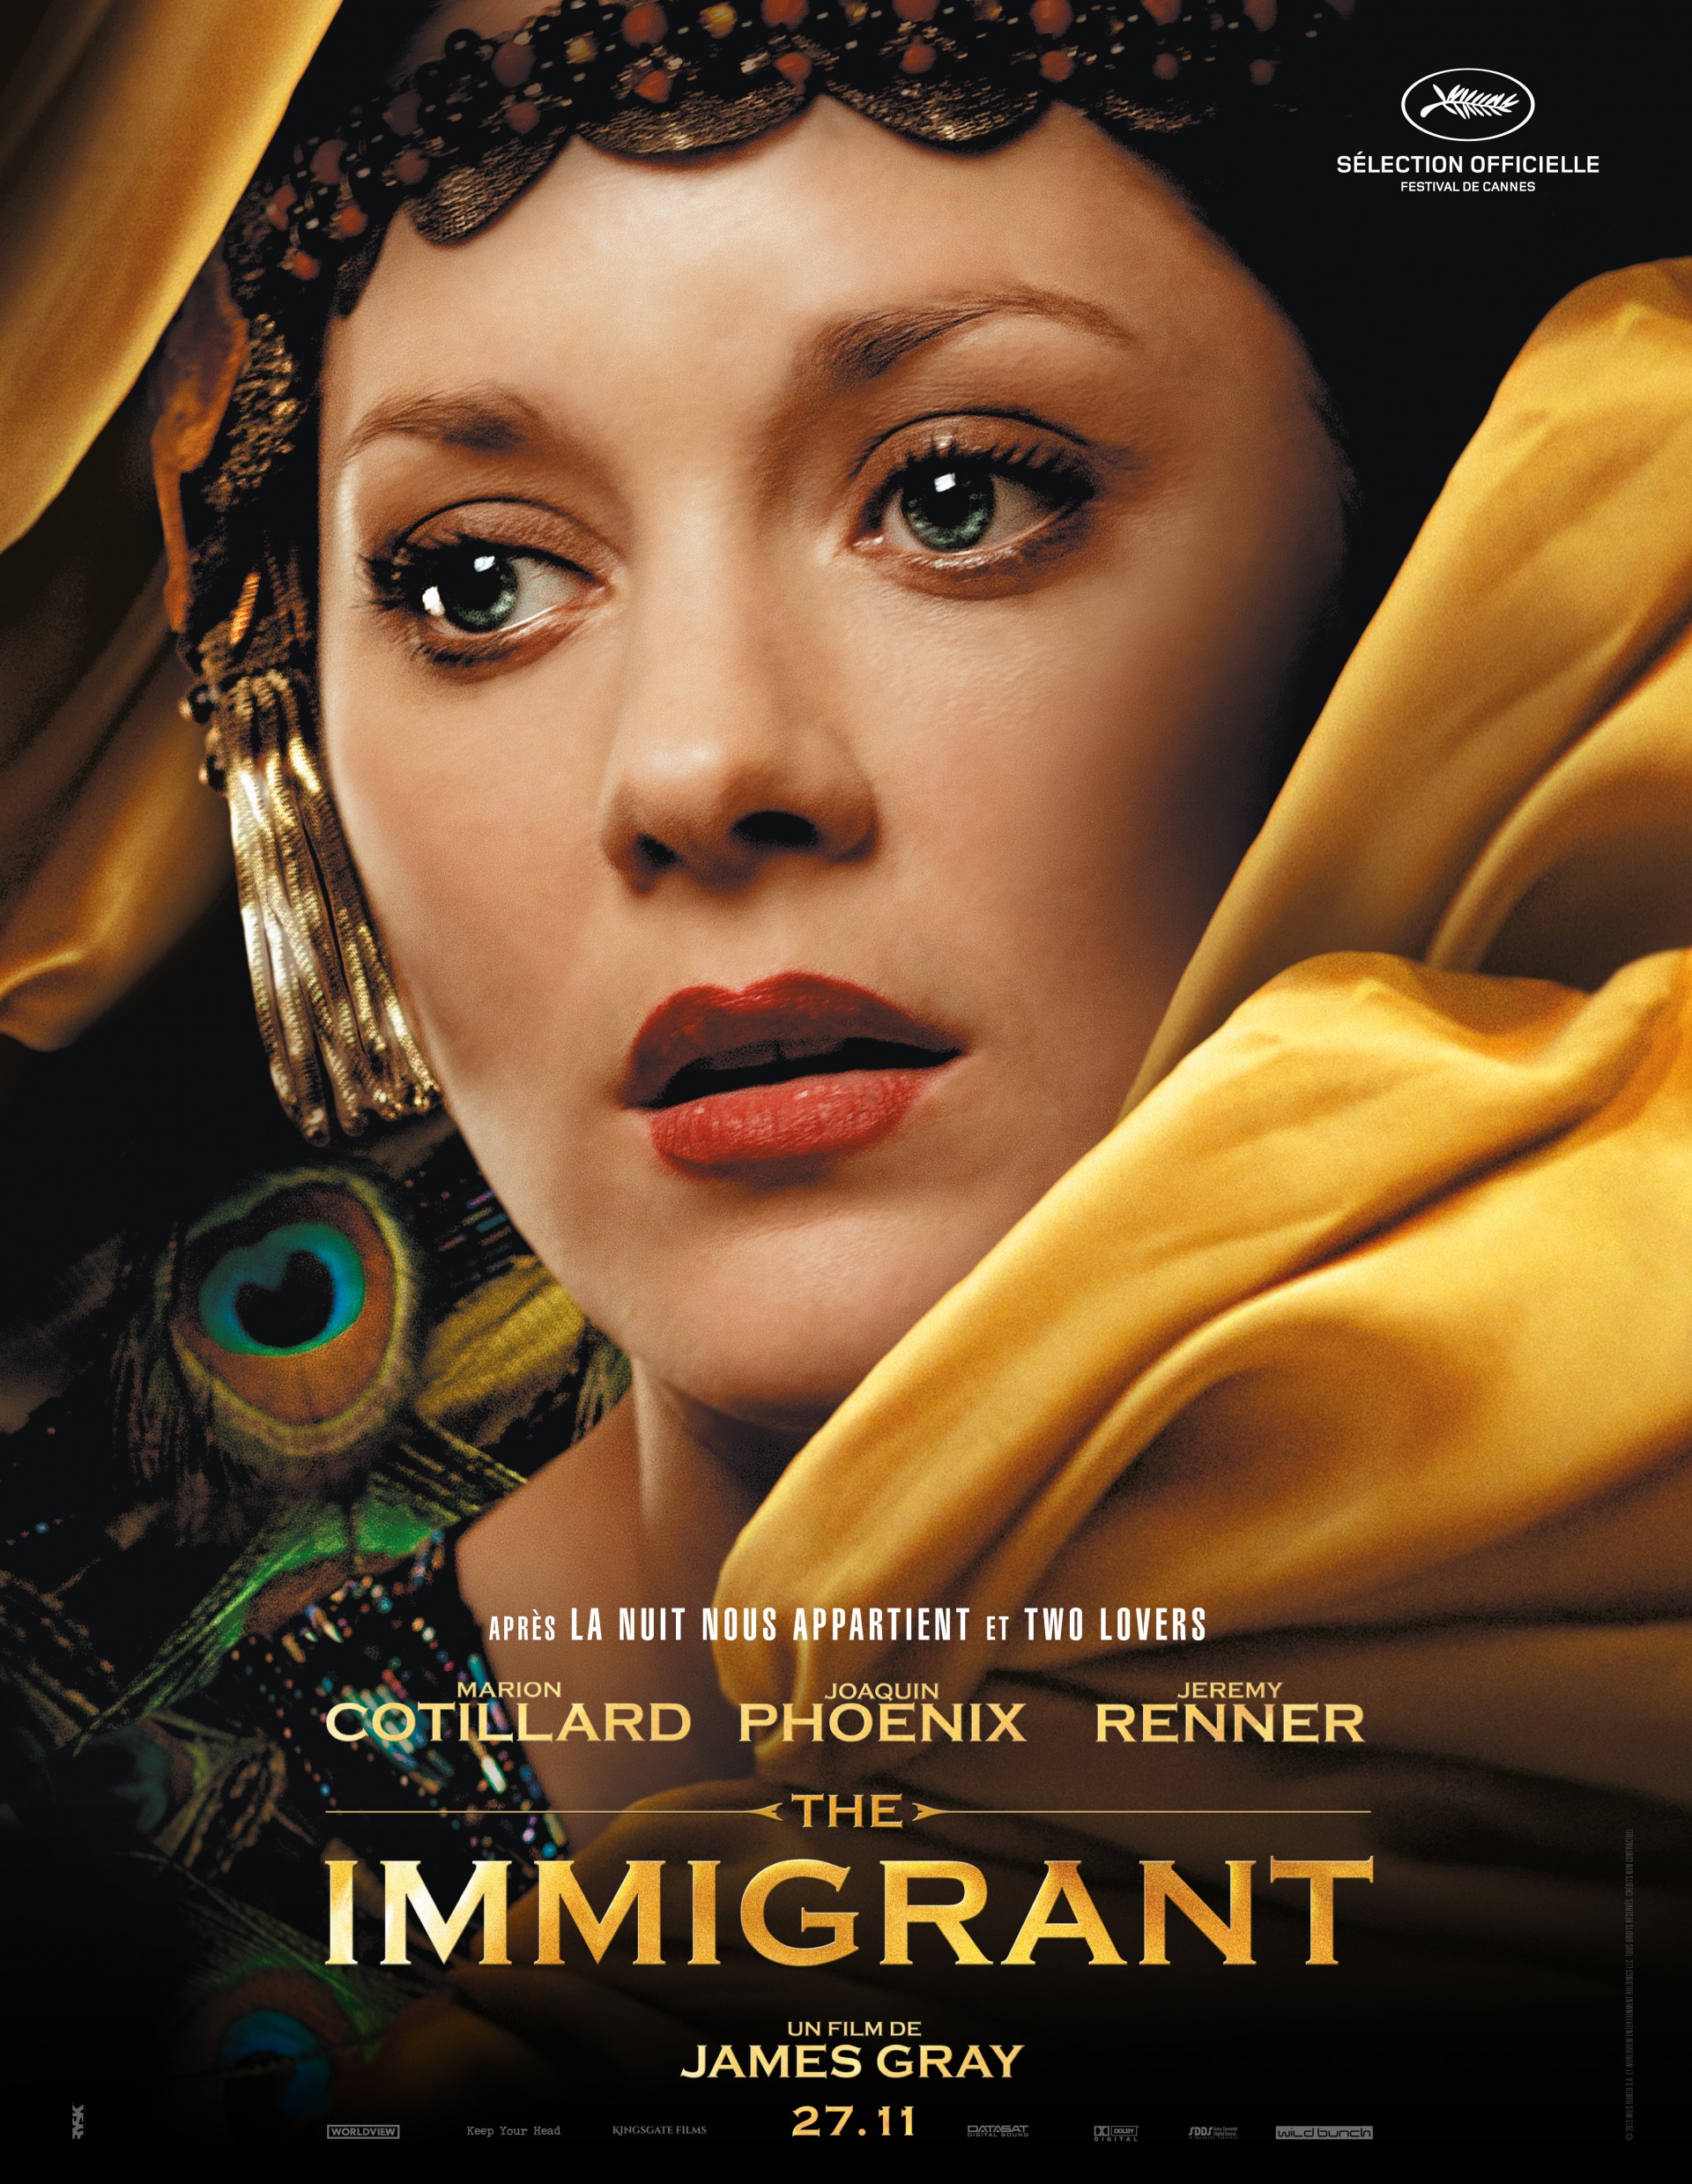 http://img.filmsactu.net/datas/films/t/h/the-immigrant/xl/the-immigrant-affiche-525560c44d065.jpg